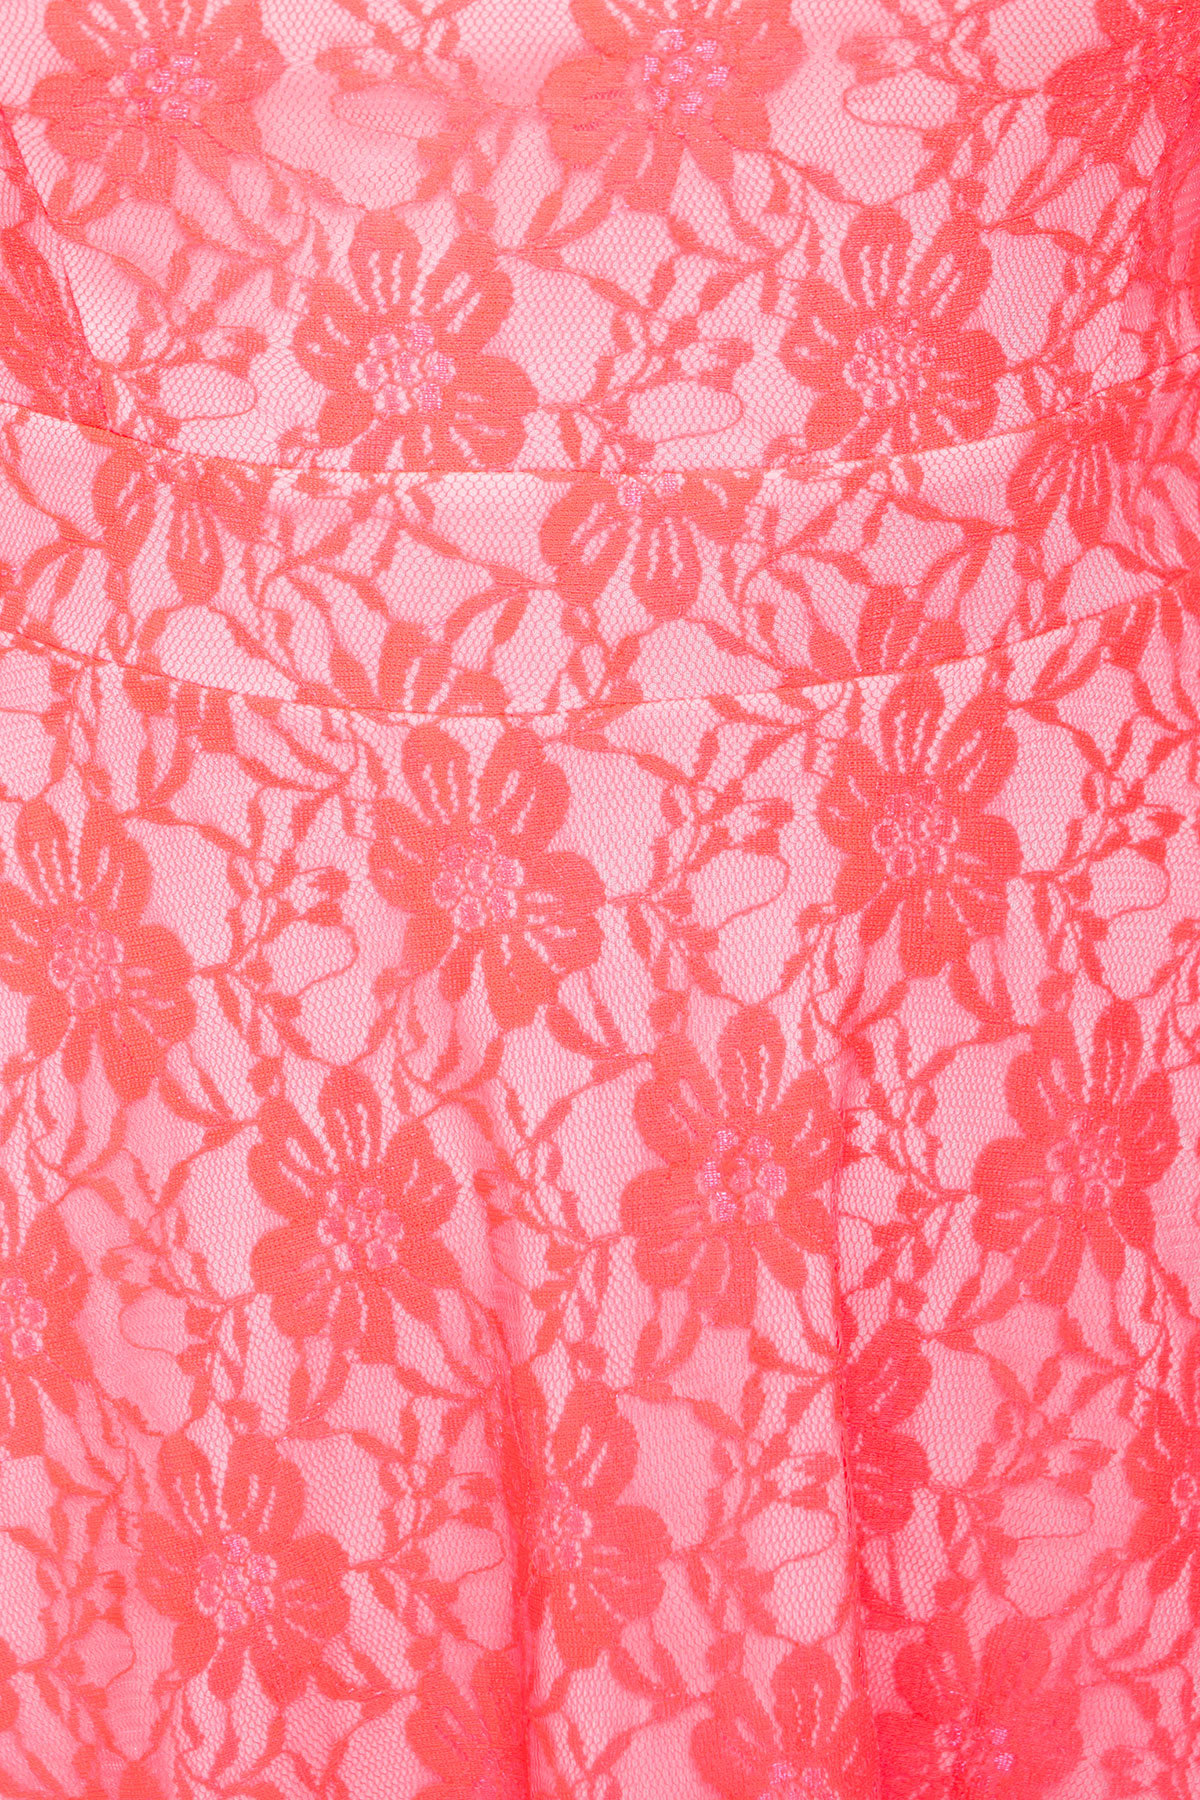 TW Платье Ермия 4989 Цвет: Коралл